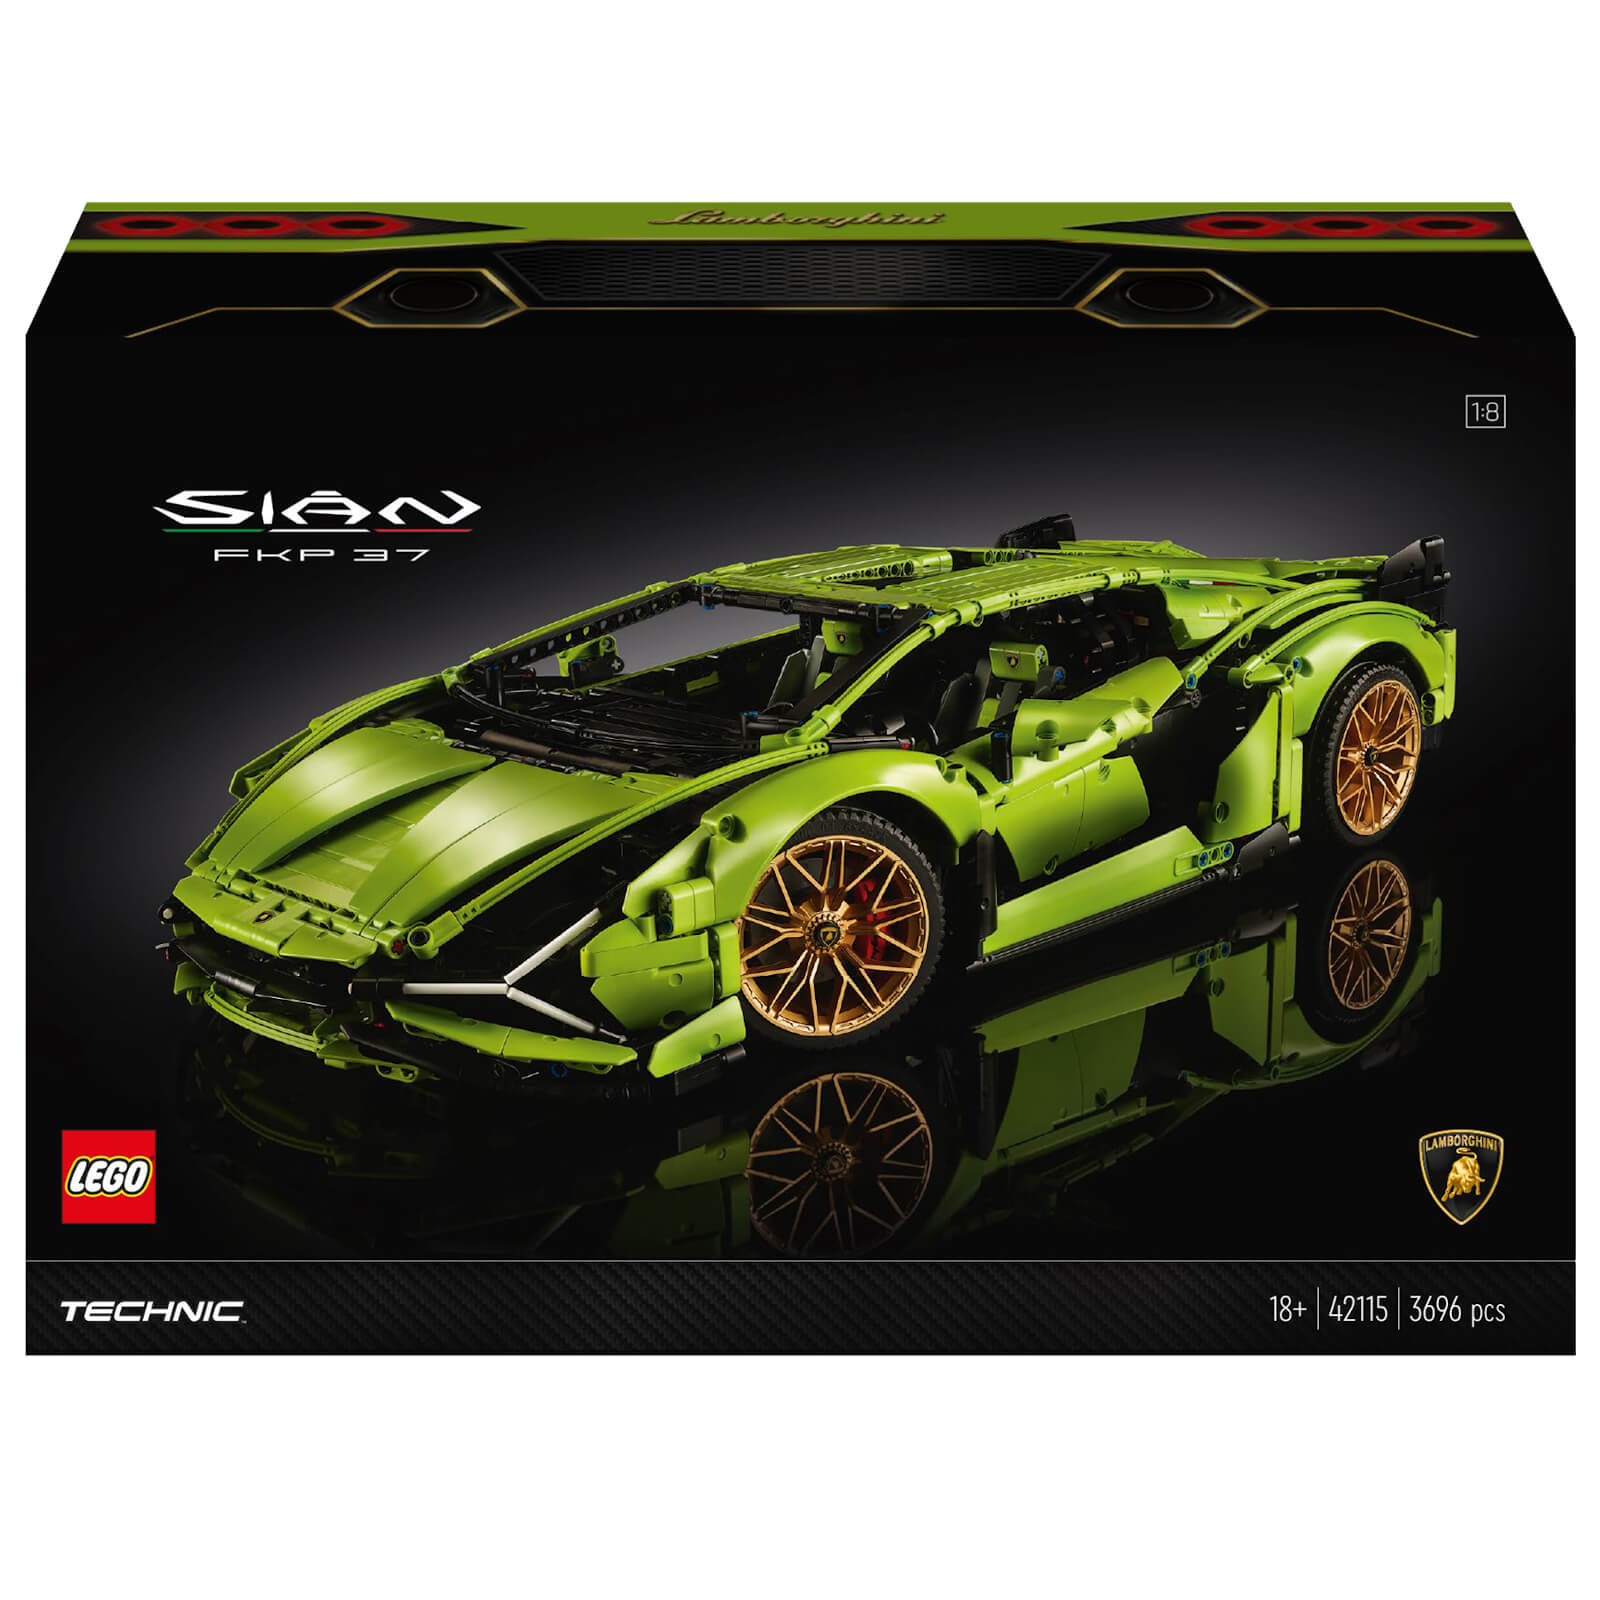 LEGO TECHNIC: Lamborghini Sián FKP 37 (42115). New! Sealed in